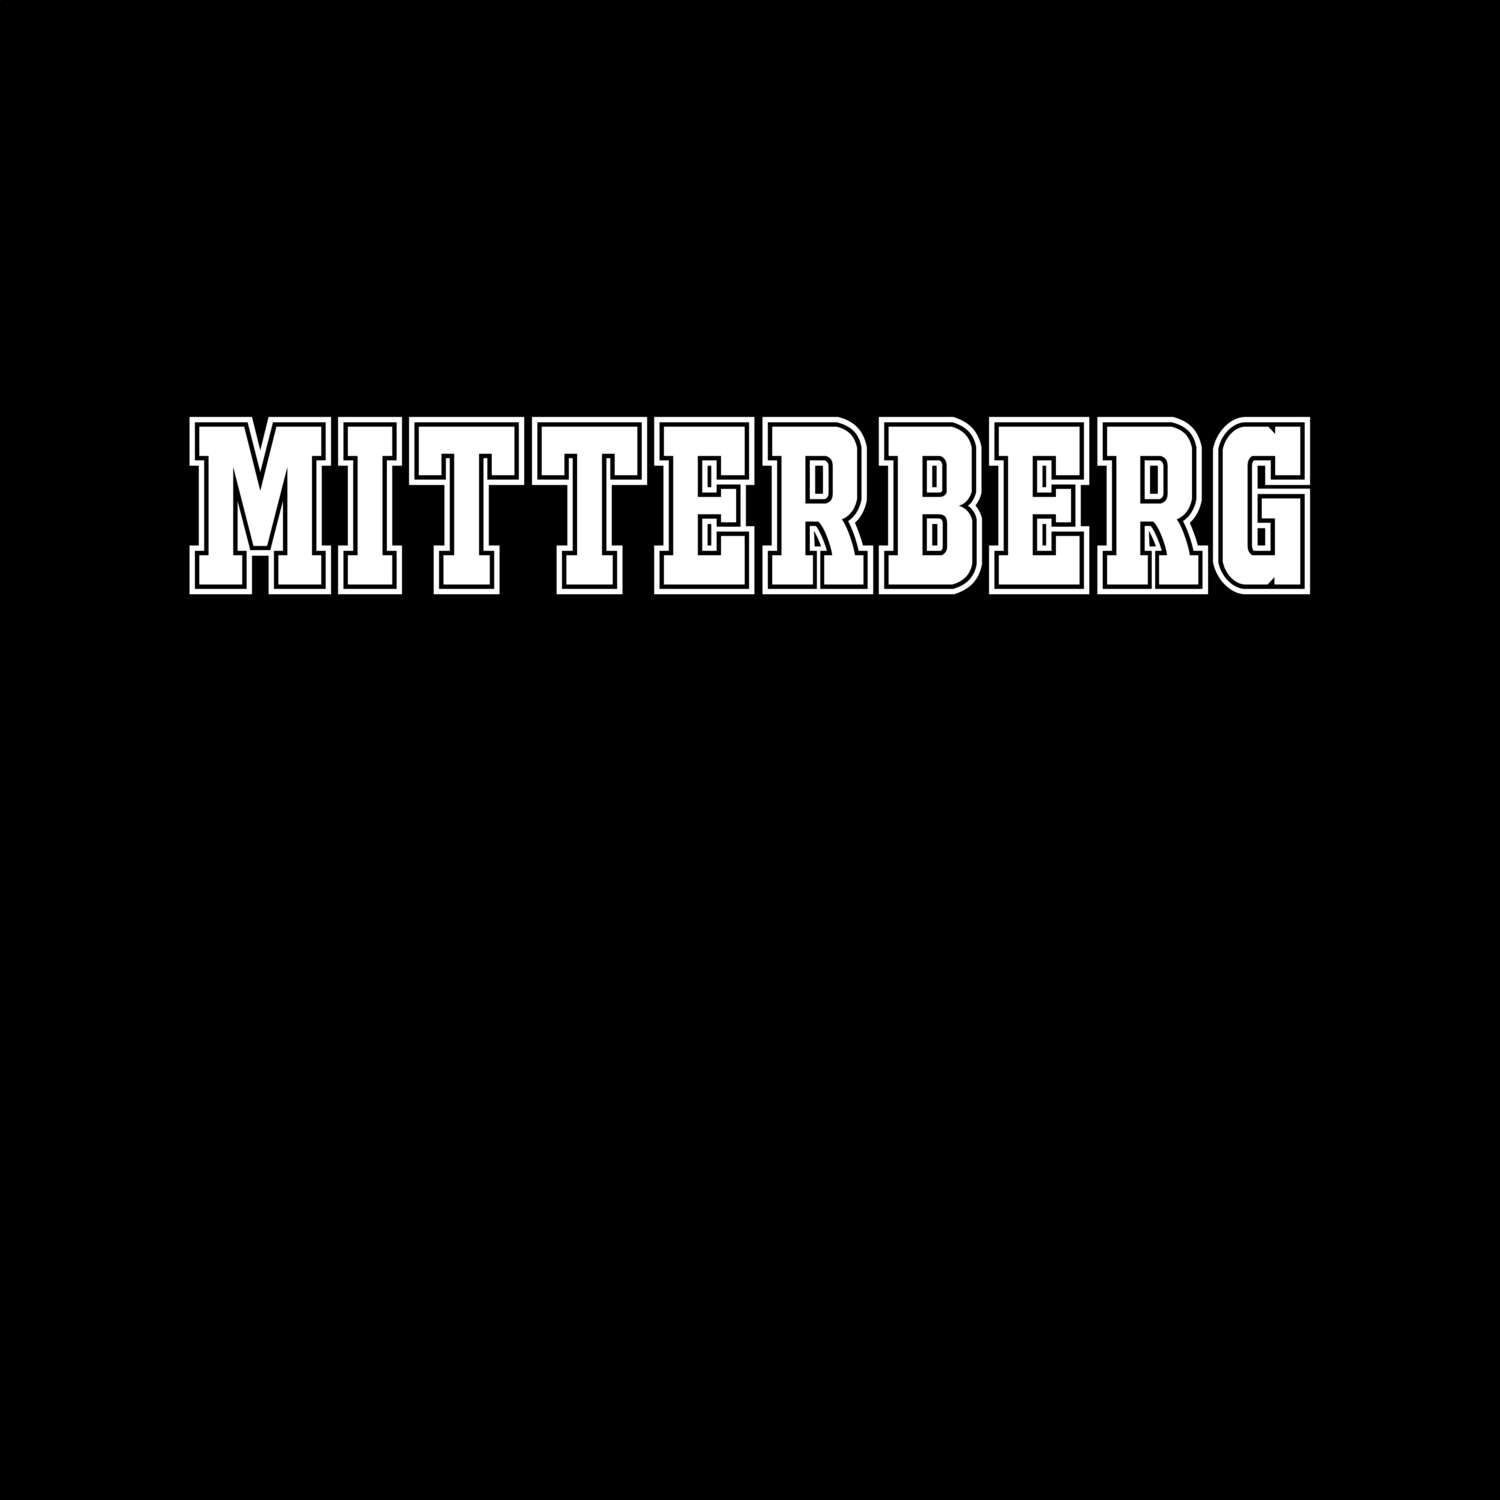 Mitterberg T-Shirt »Classic«